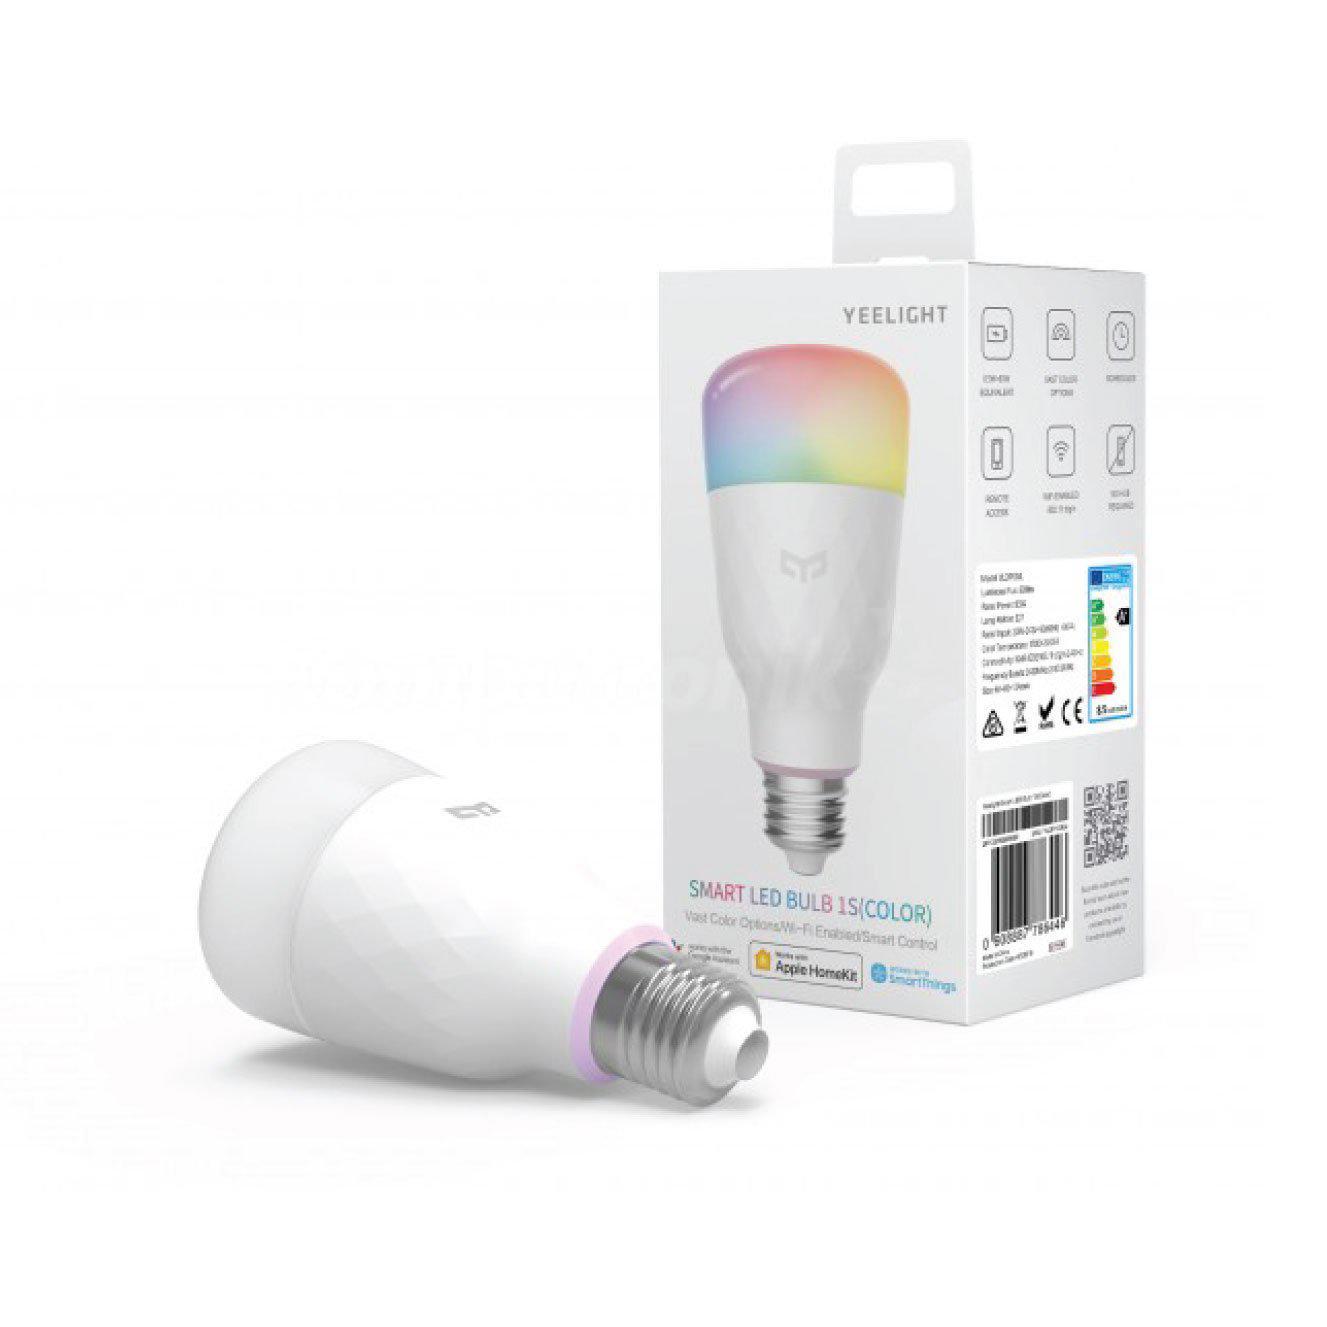 MI - Yeelight Smart Led Bulb 1s (Color)